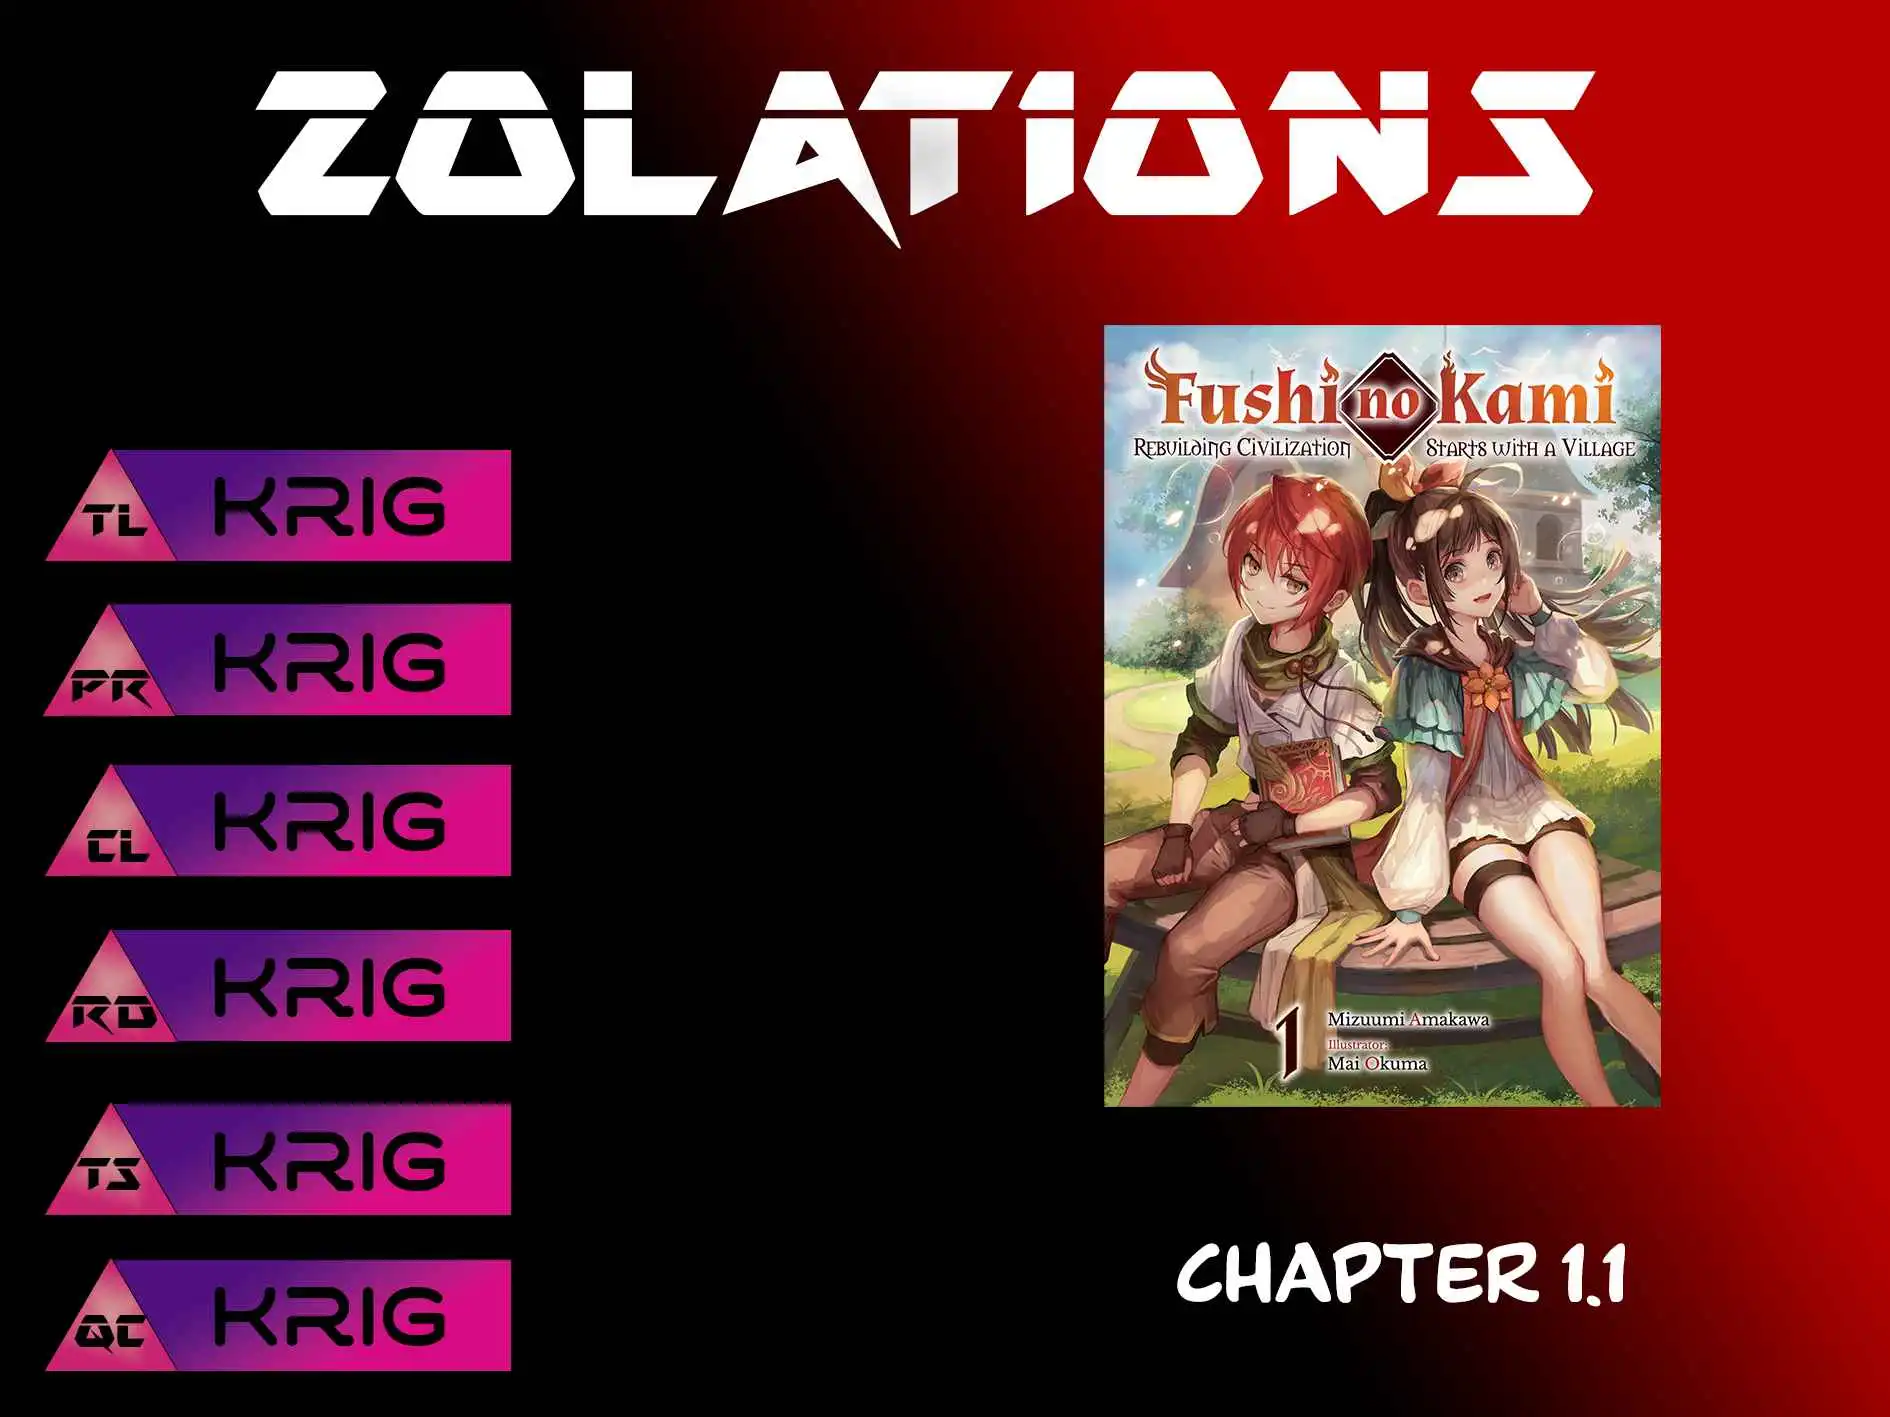 Fushi no Kami: Rebuilding Civilization Starts with a Village Chapter 1.1